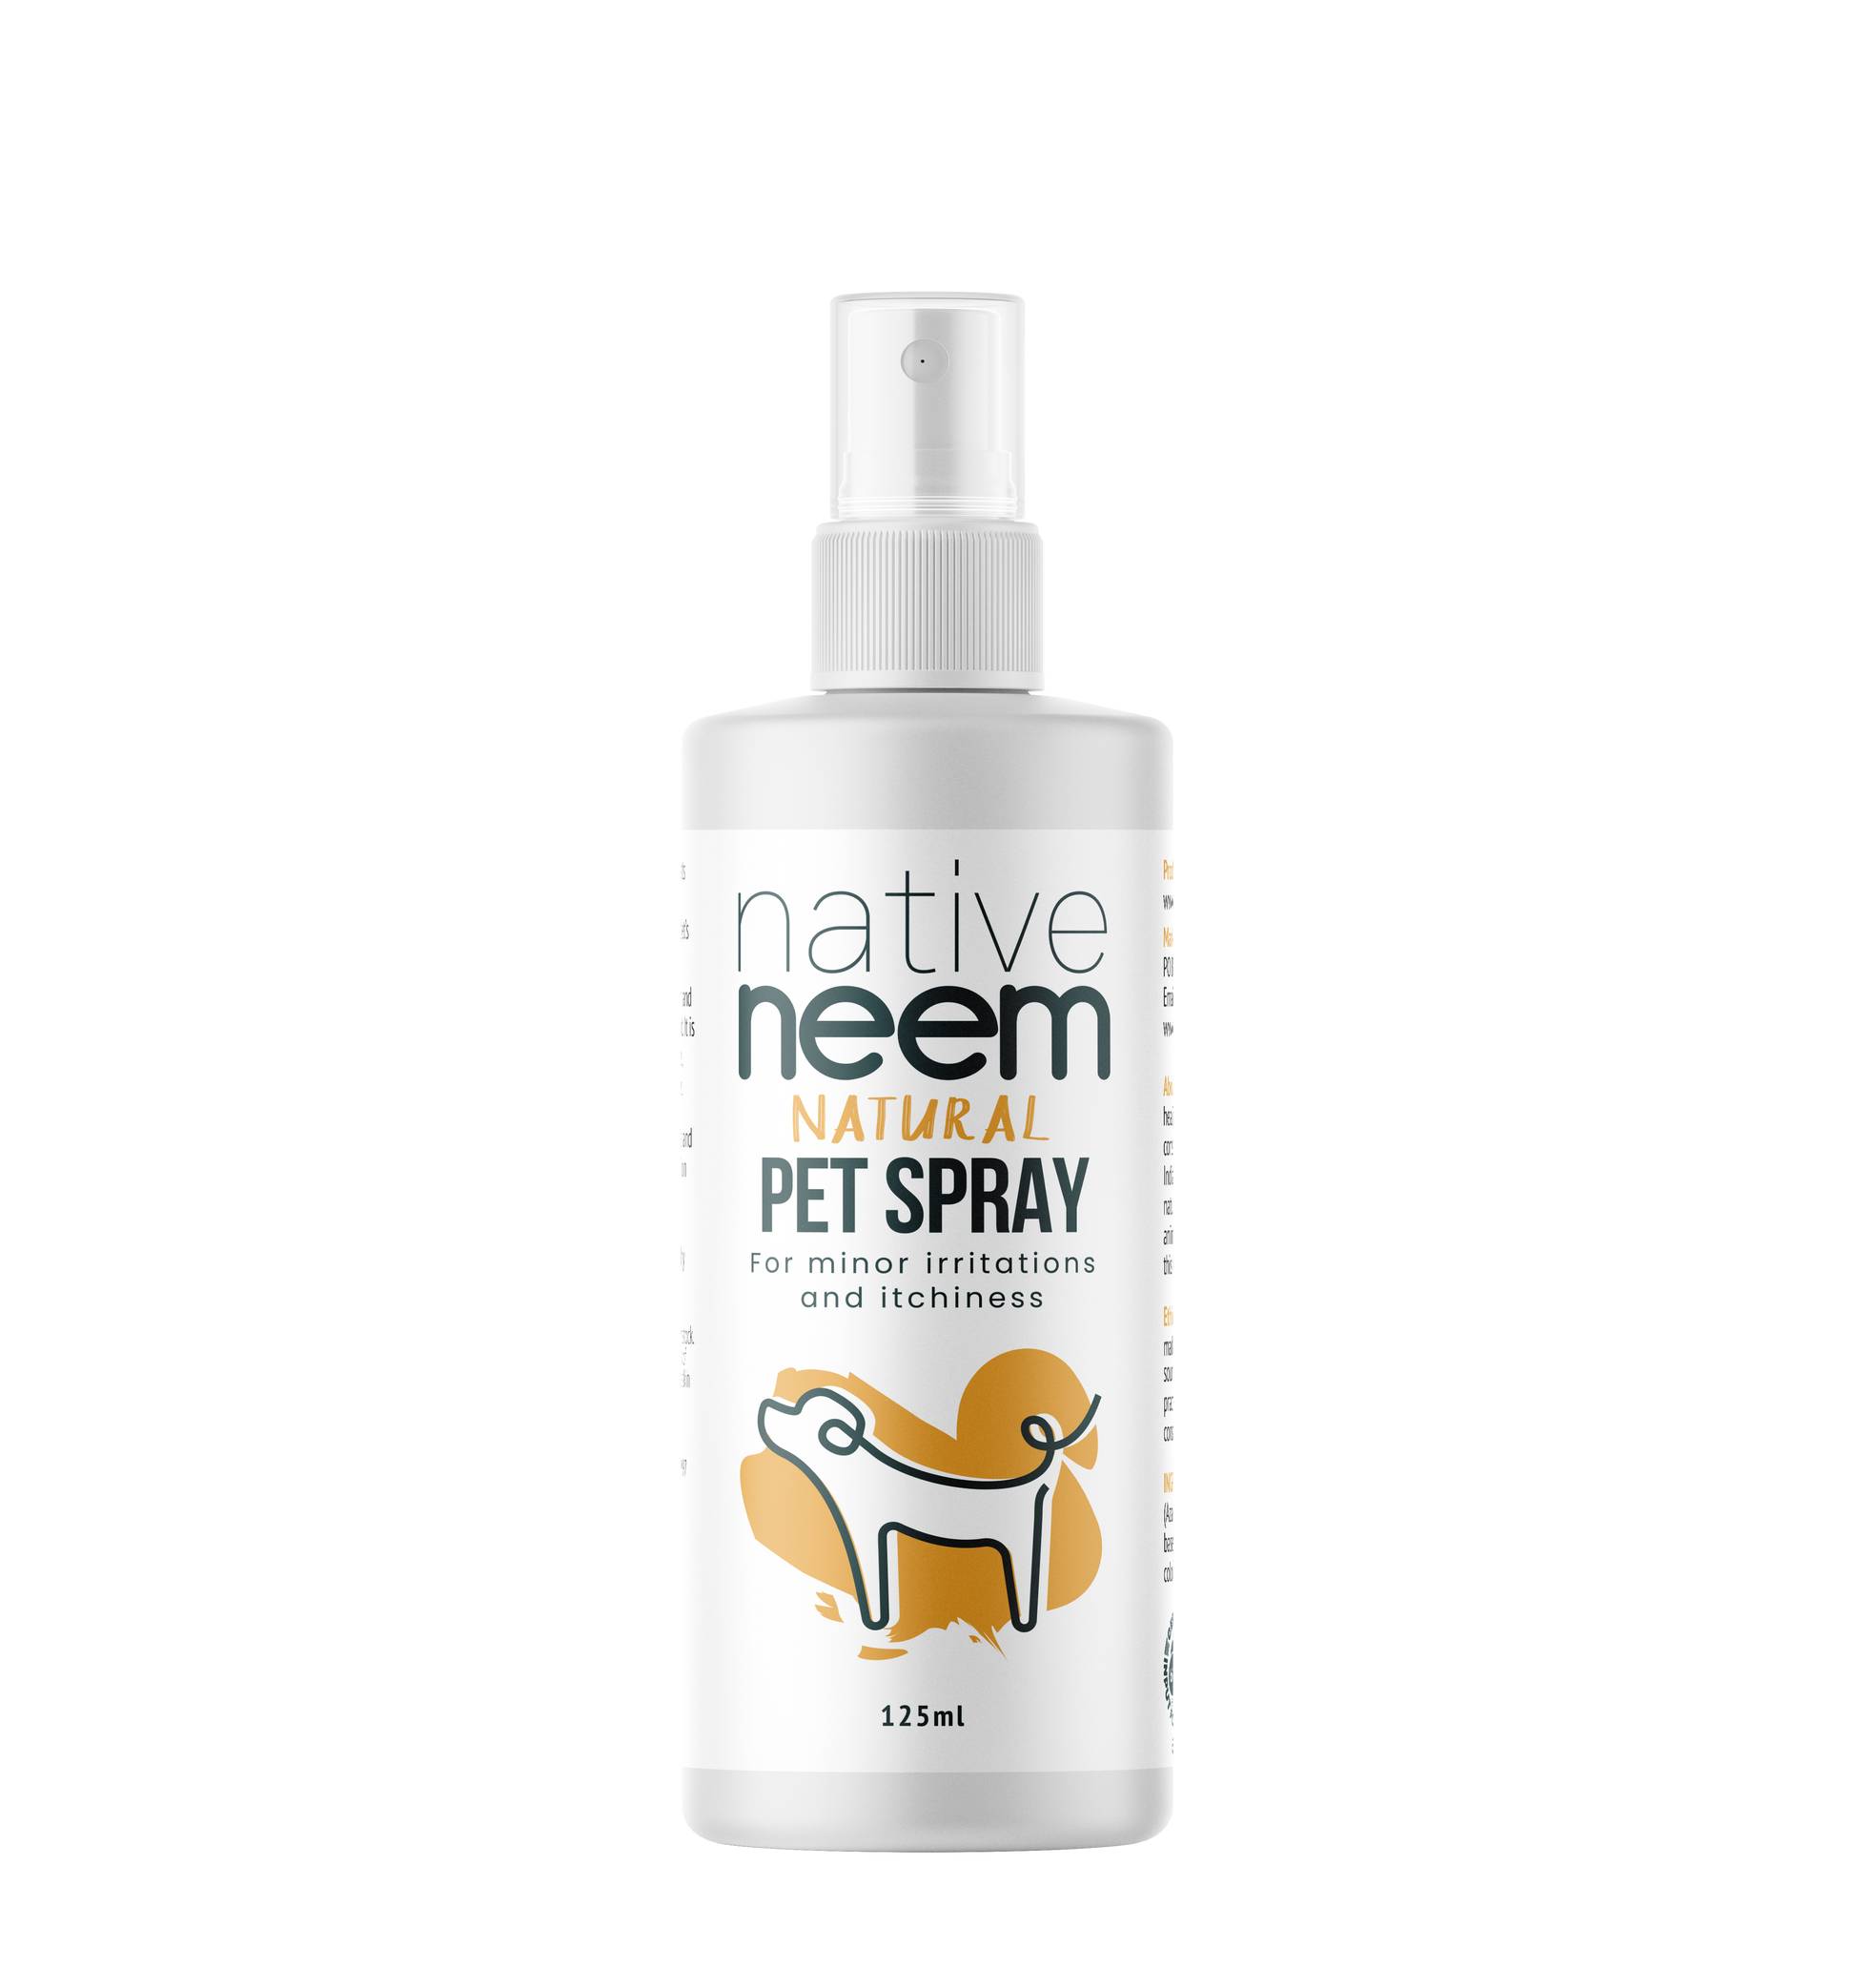 Organic Neem Pet Spray 125ml - NativeNeem